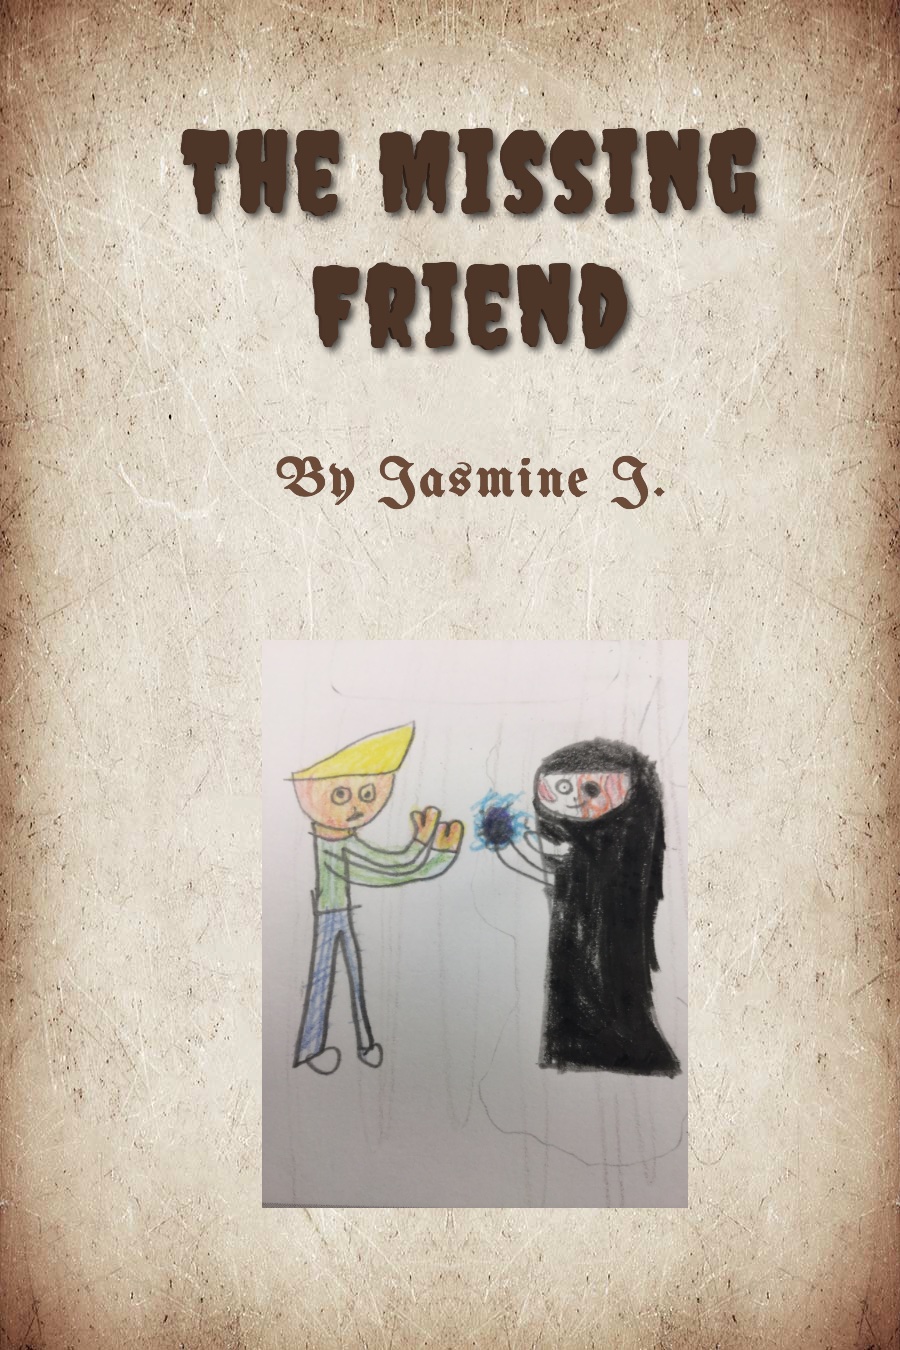 The Missing Friend by Jasmine J